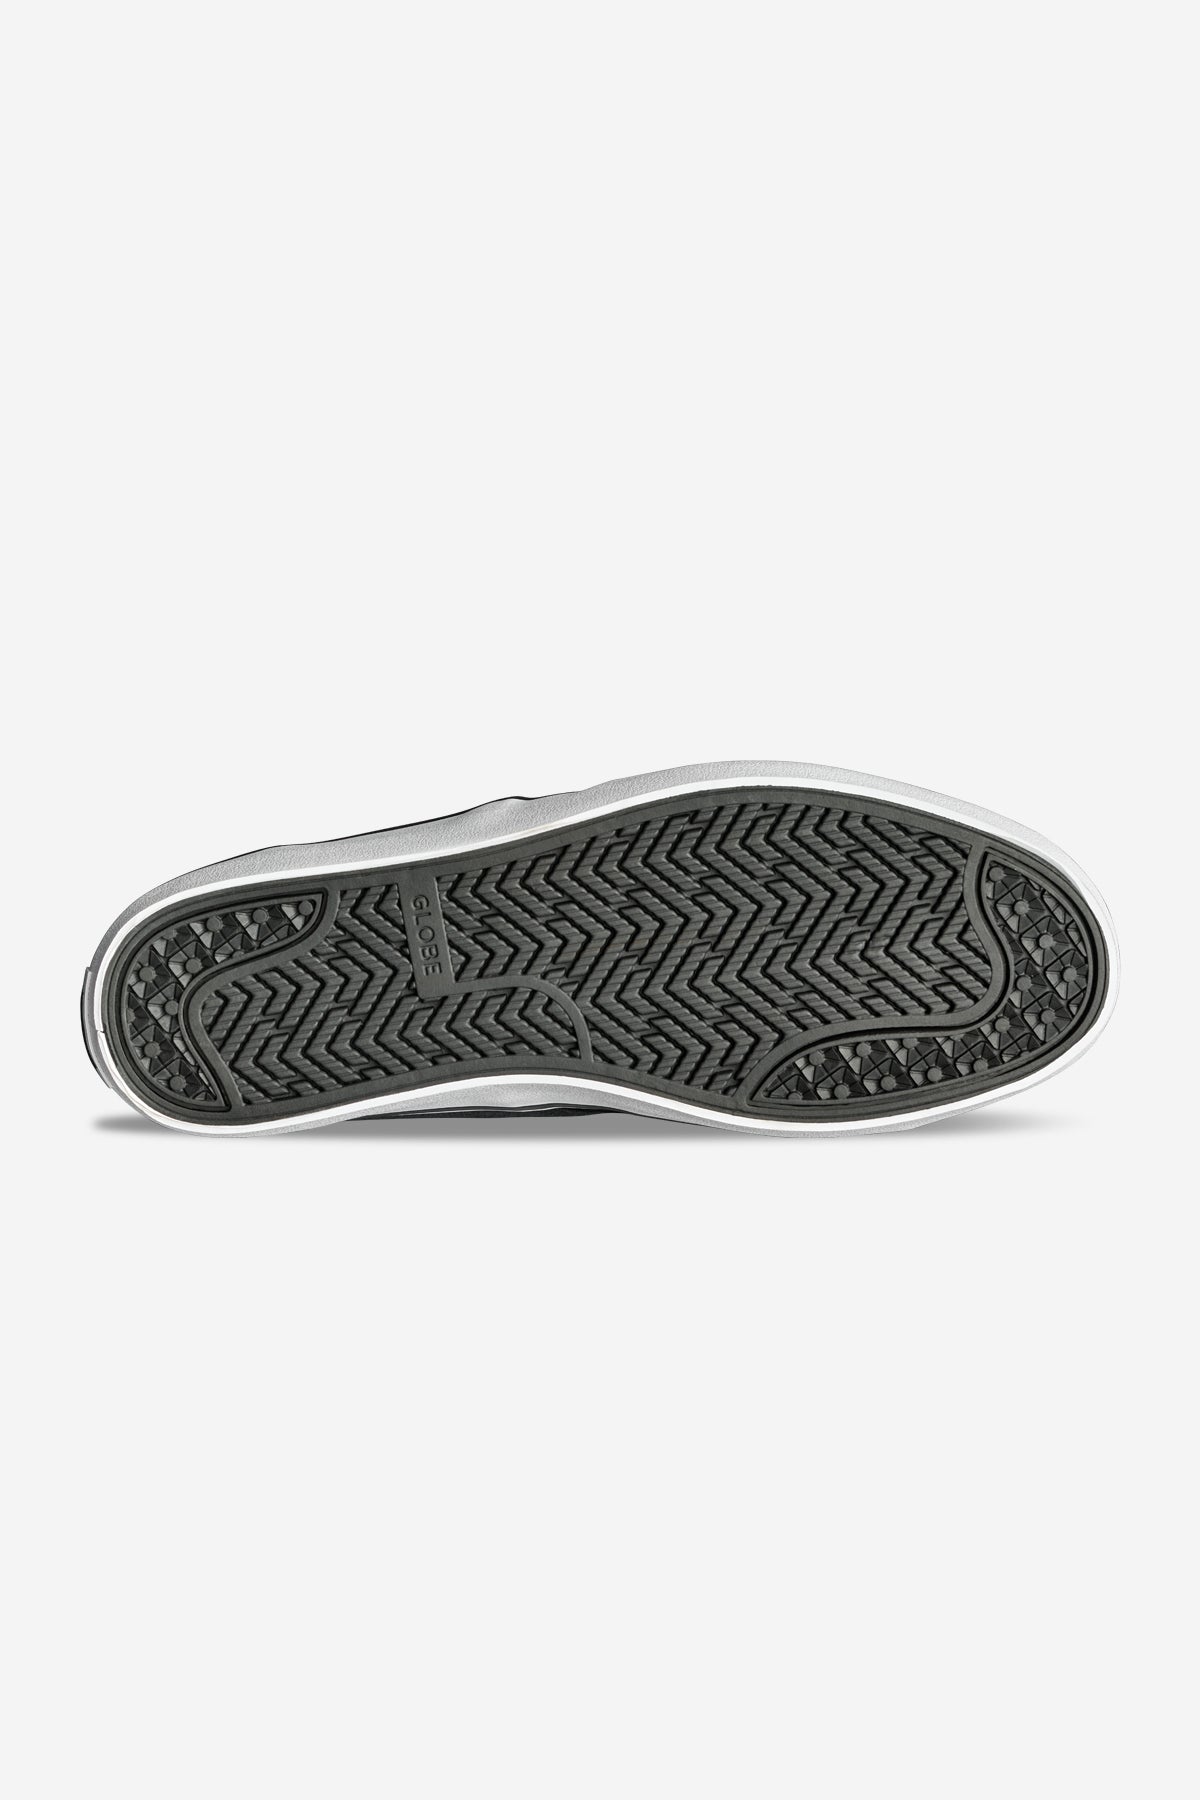 Motley II Strap Black/White skate shoes